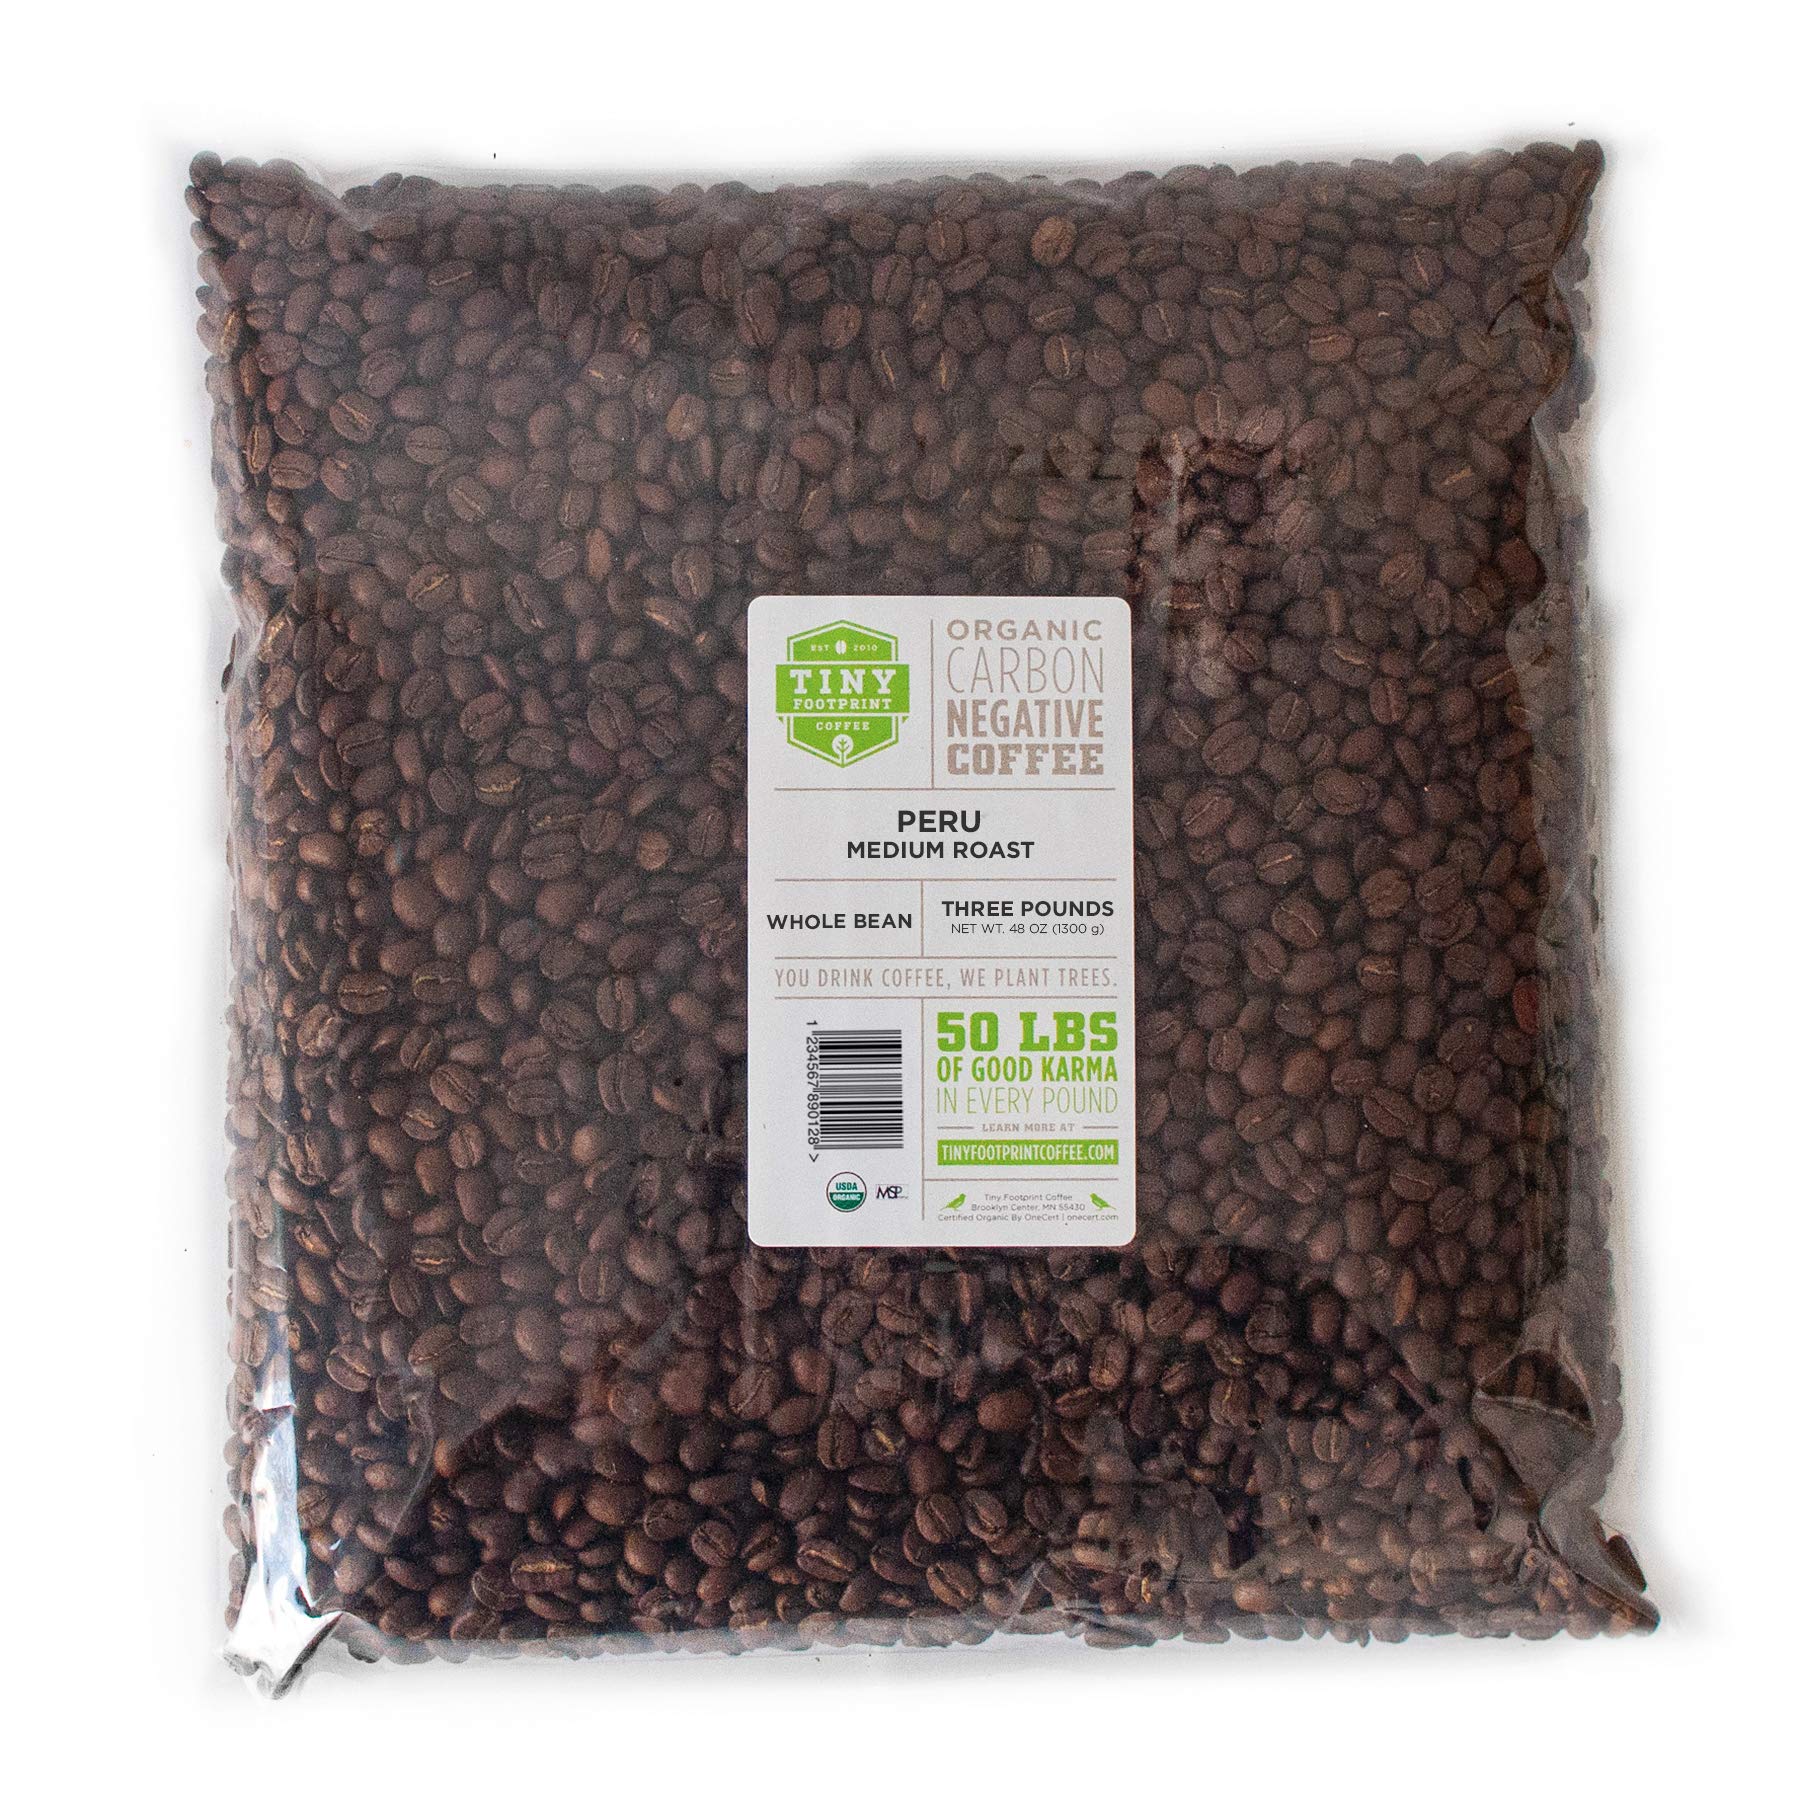 Tiny Footprint Coffee - Fair Trade Organic Peru APU Medium Roast - Whole Bean Coffee, USDA Organic & Carbon Negative - You Drink Coffee, We Plant T...